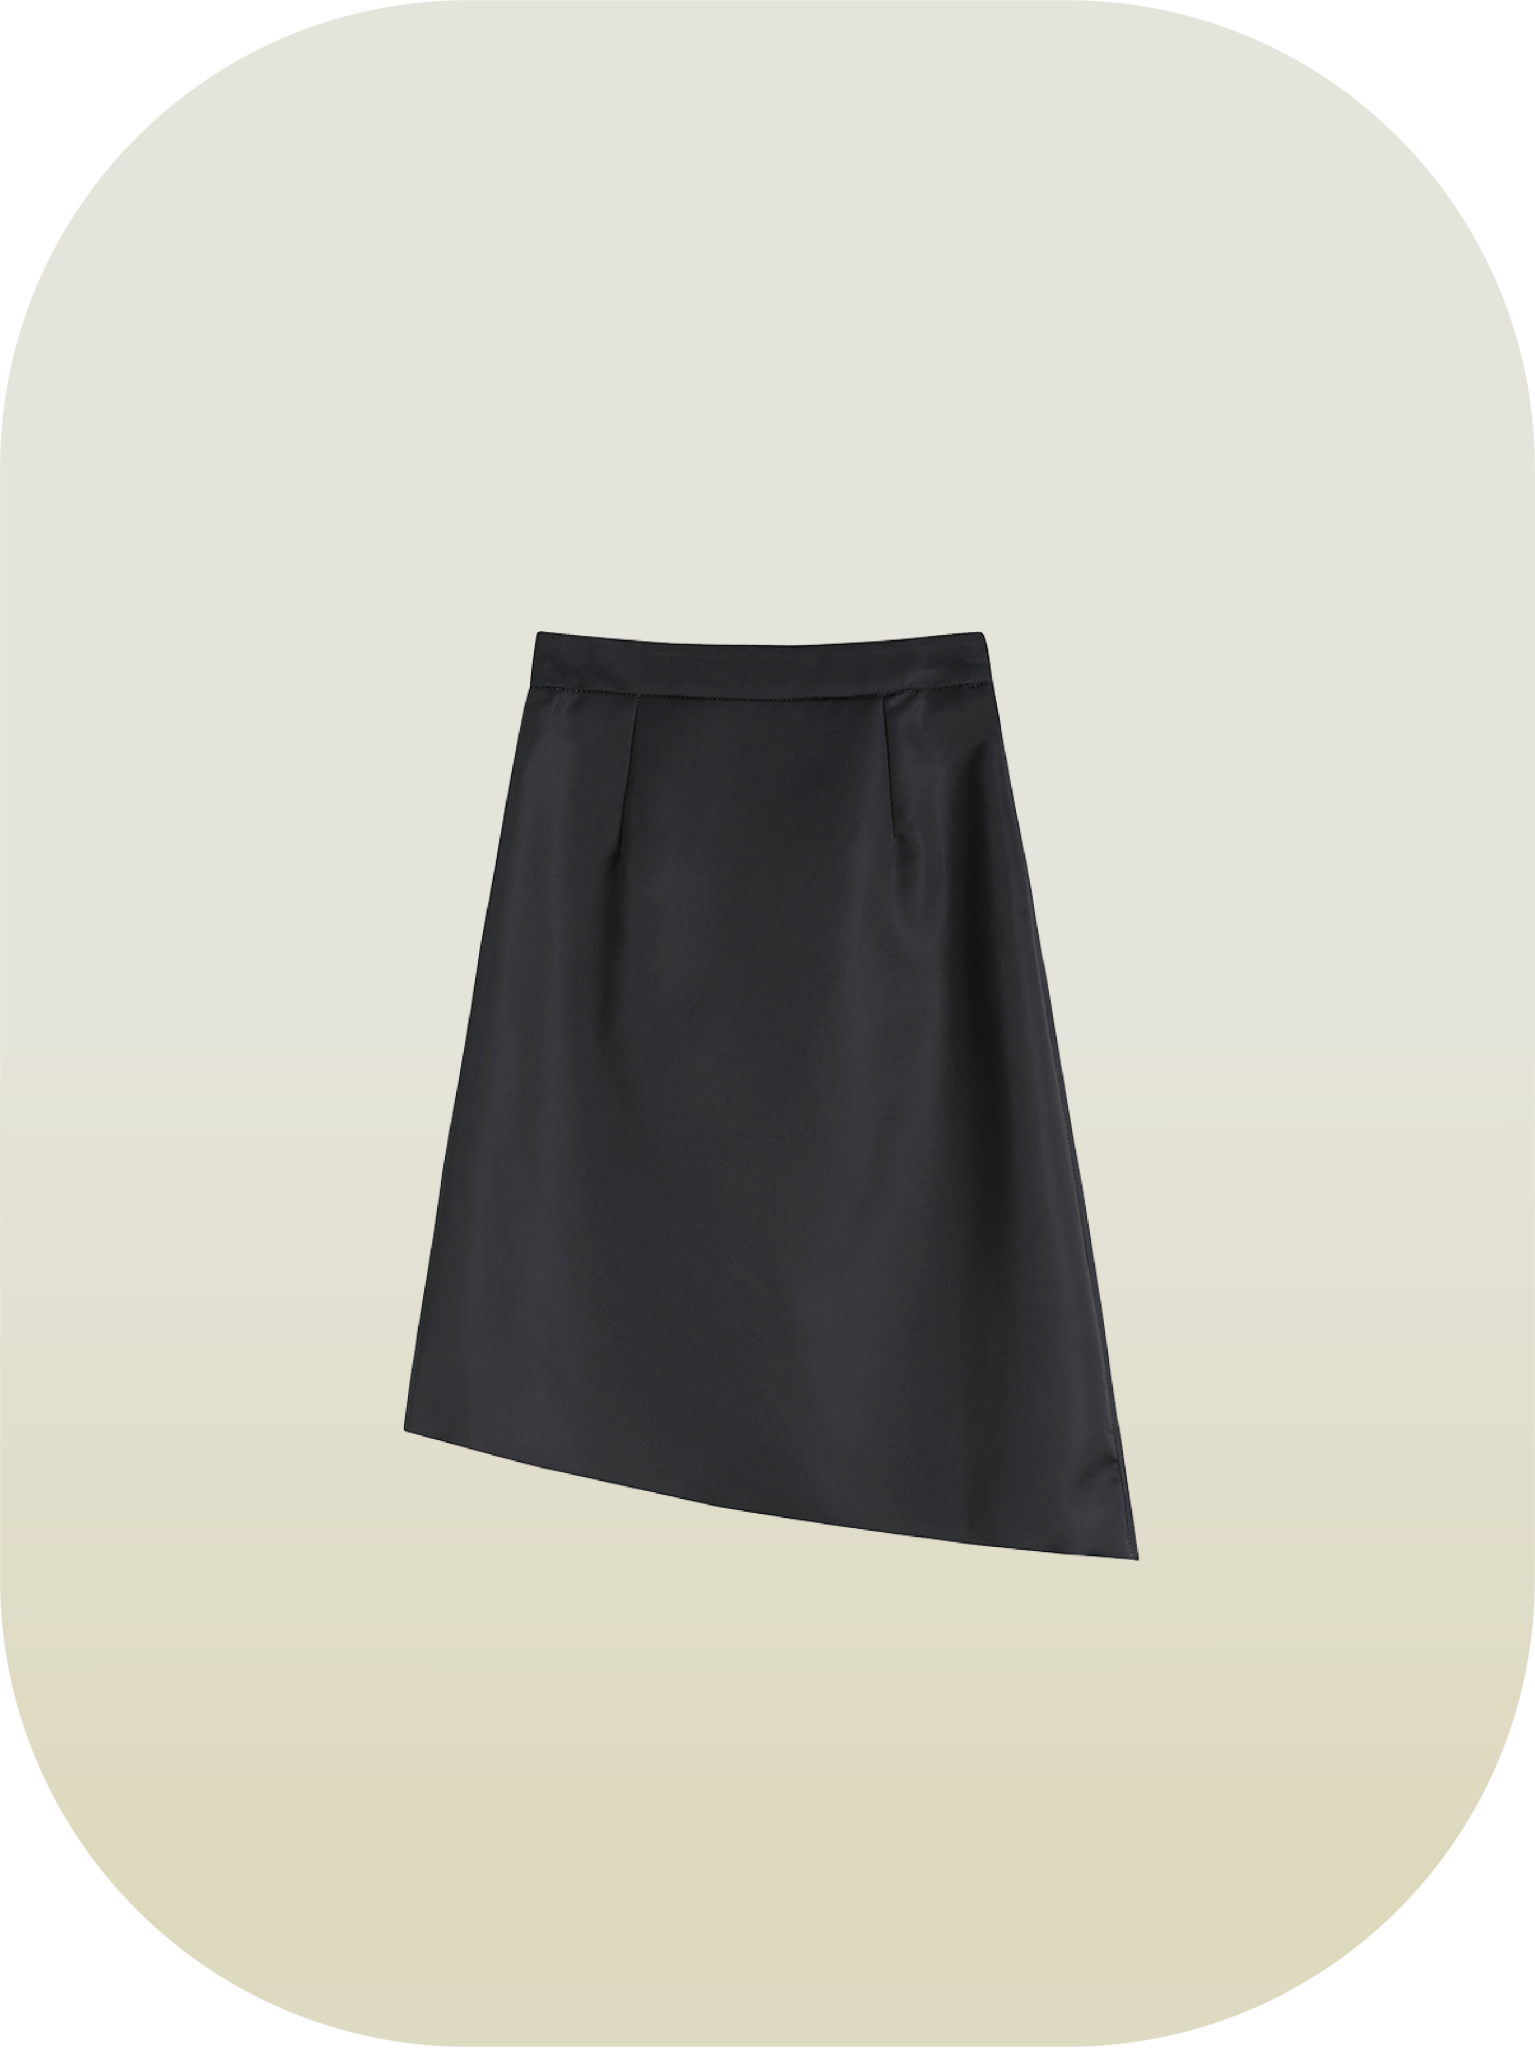 A-Type High Wasit Skirt